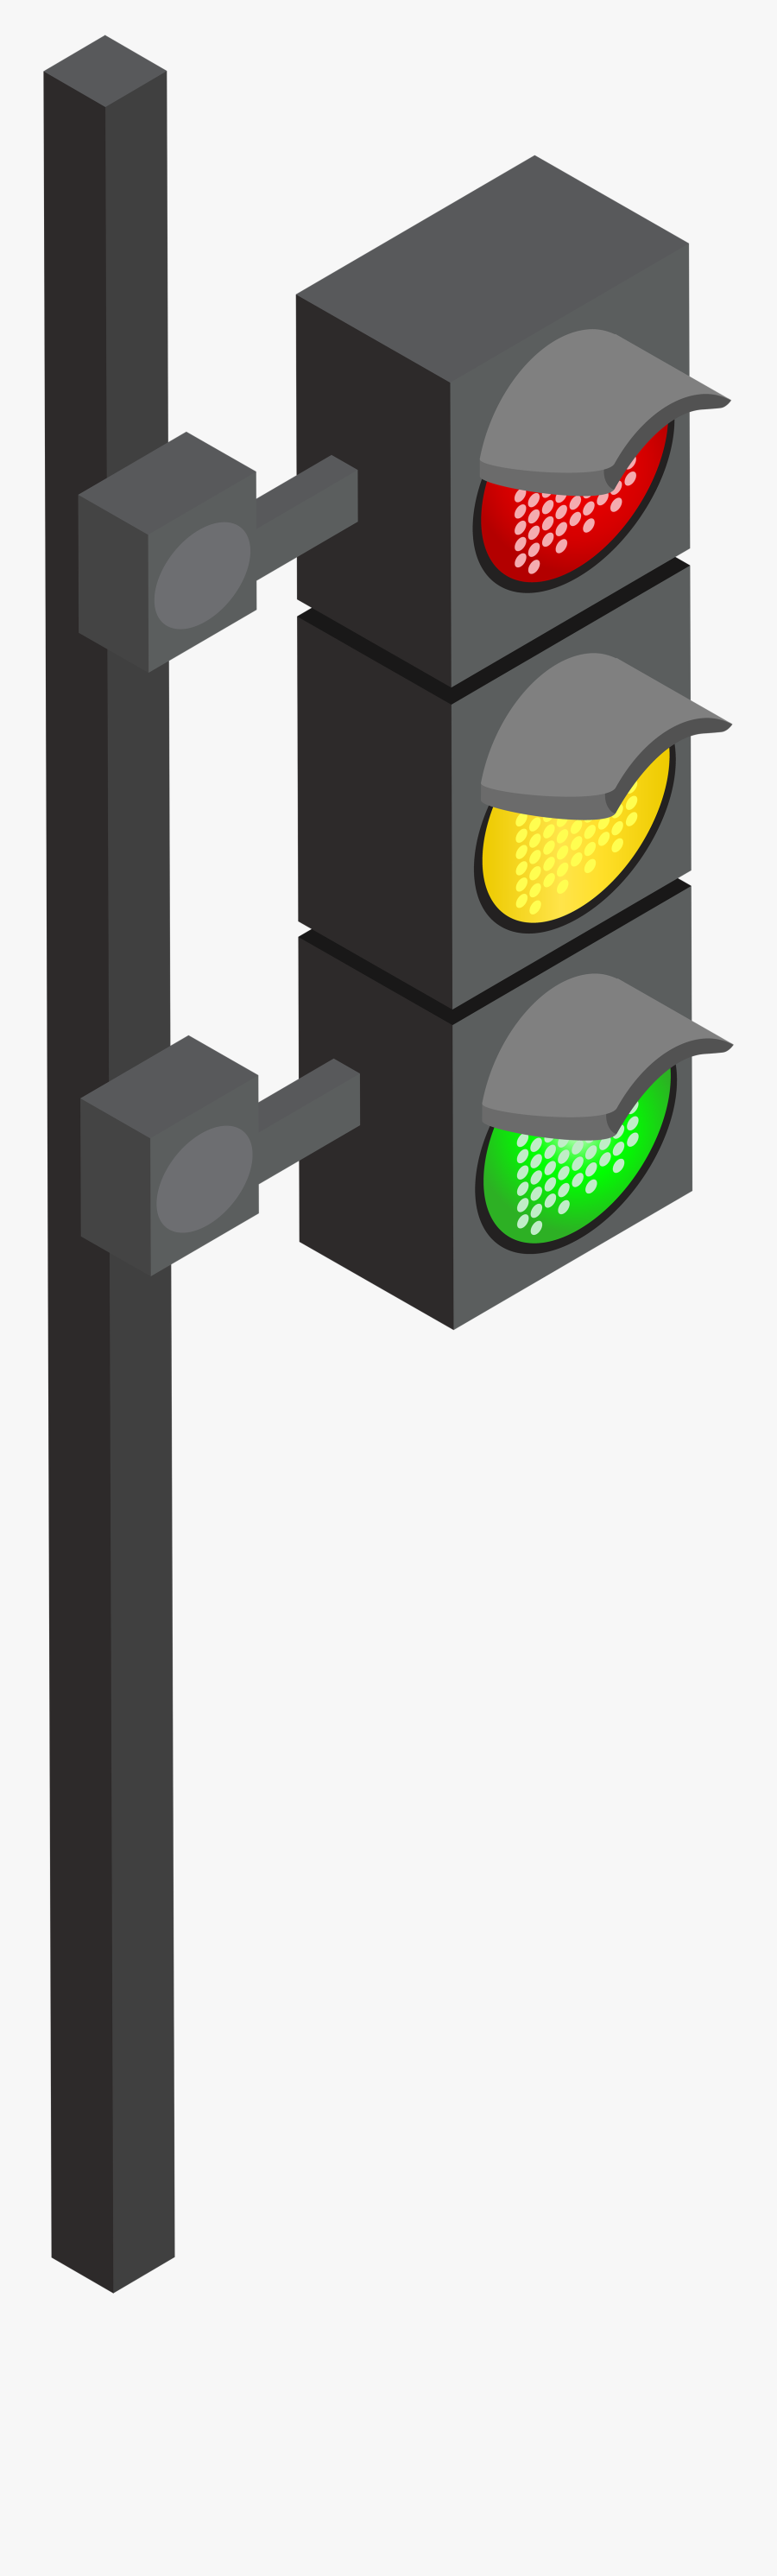 Traffic Light Png Clip Art - Traffic Light Clipart Png, Transparent Clipart